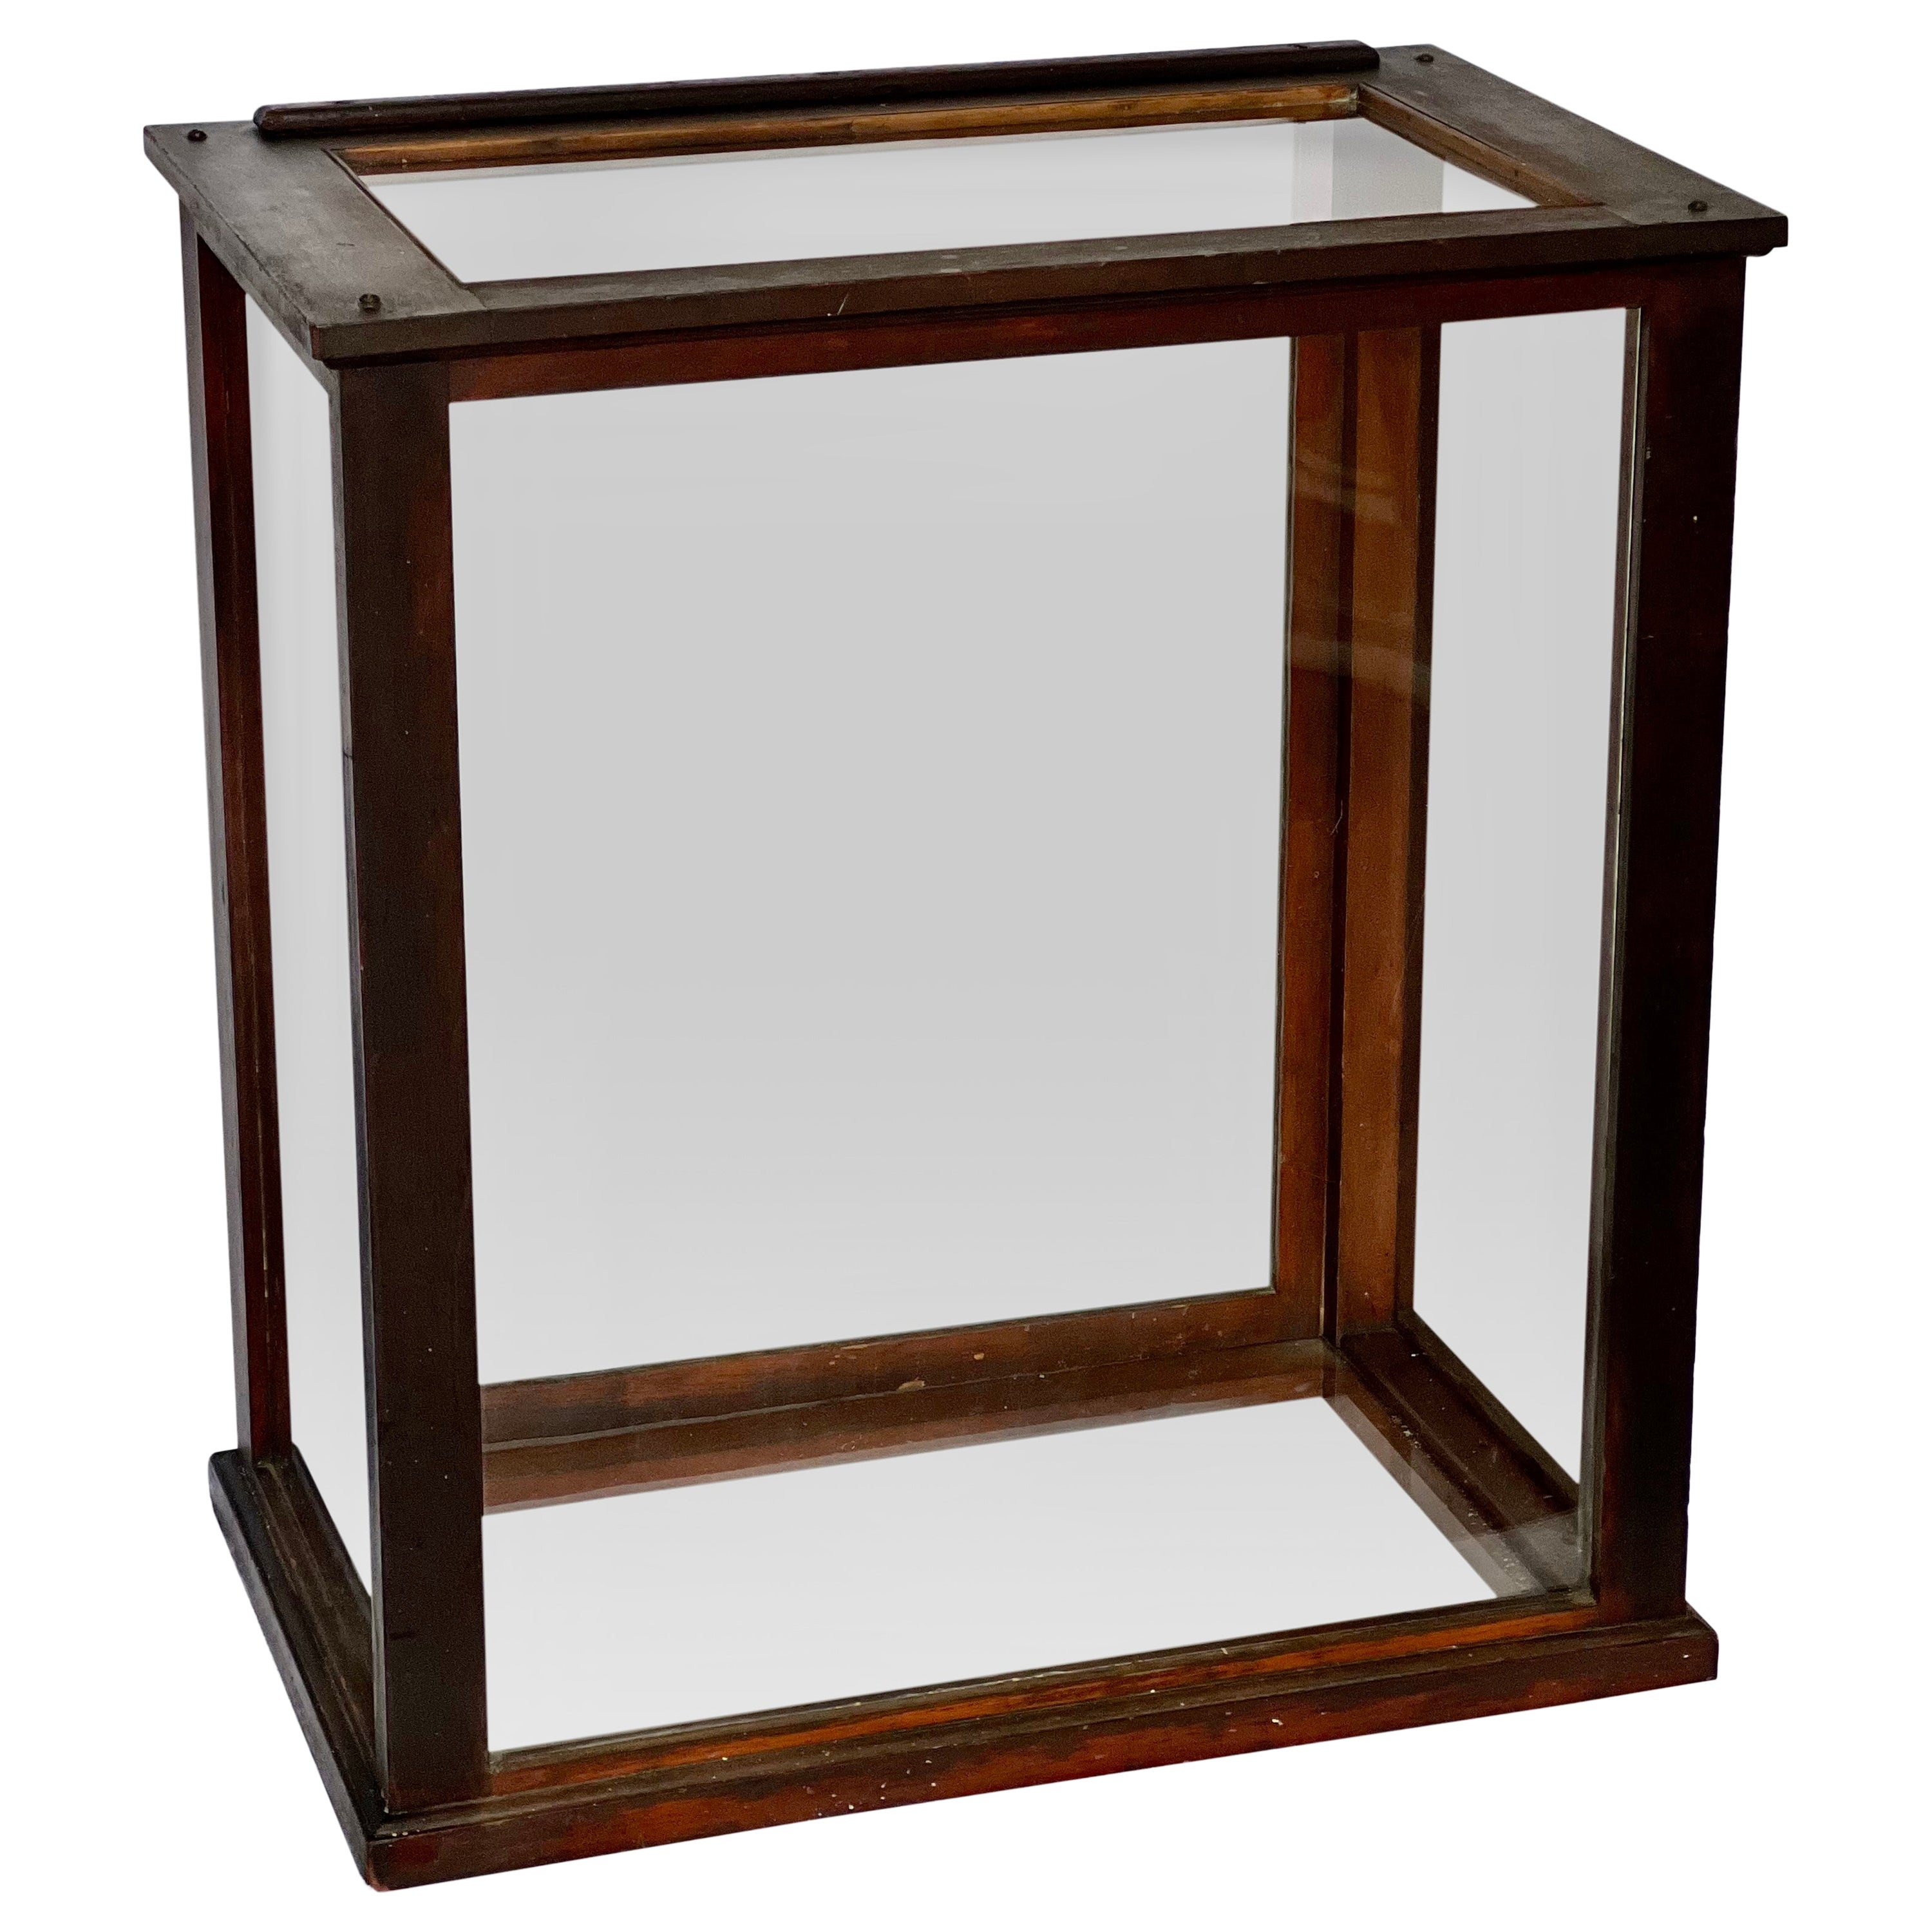 Antique English Mahogany and Glass Countertop Shop Display Case